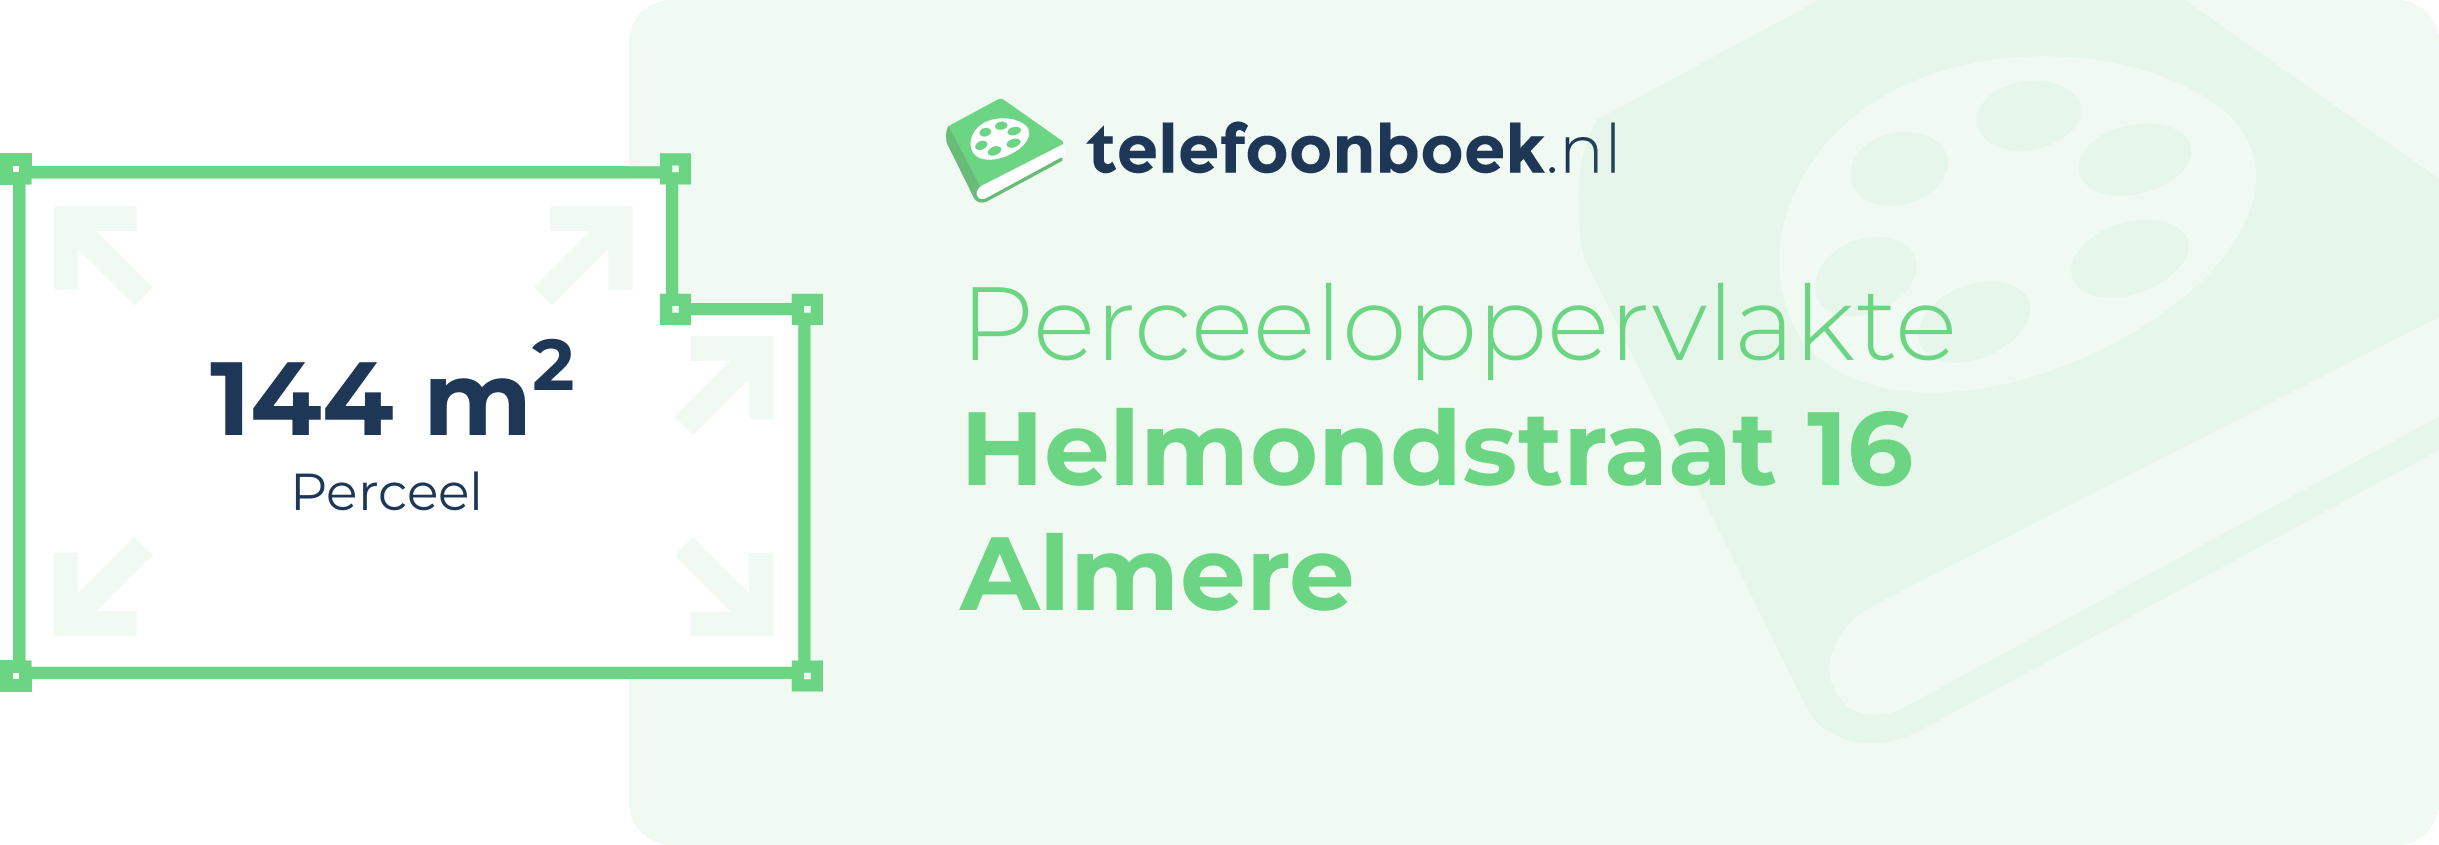 Perceeloppervlakte Helmondstraat 16 Almere